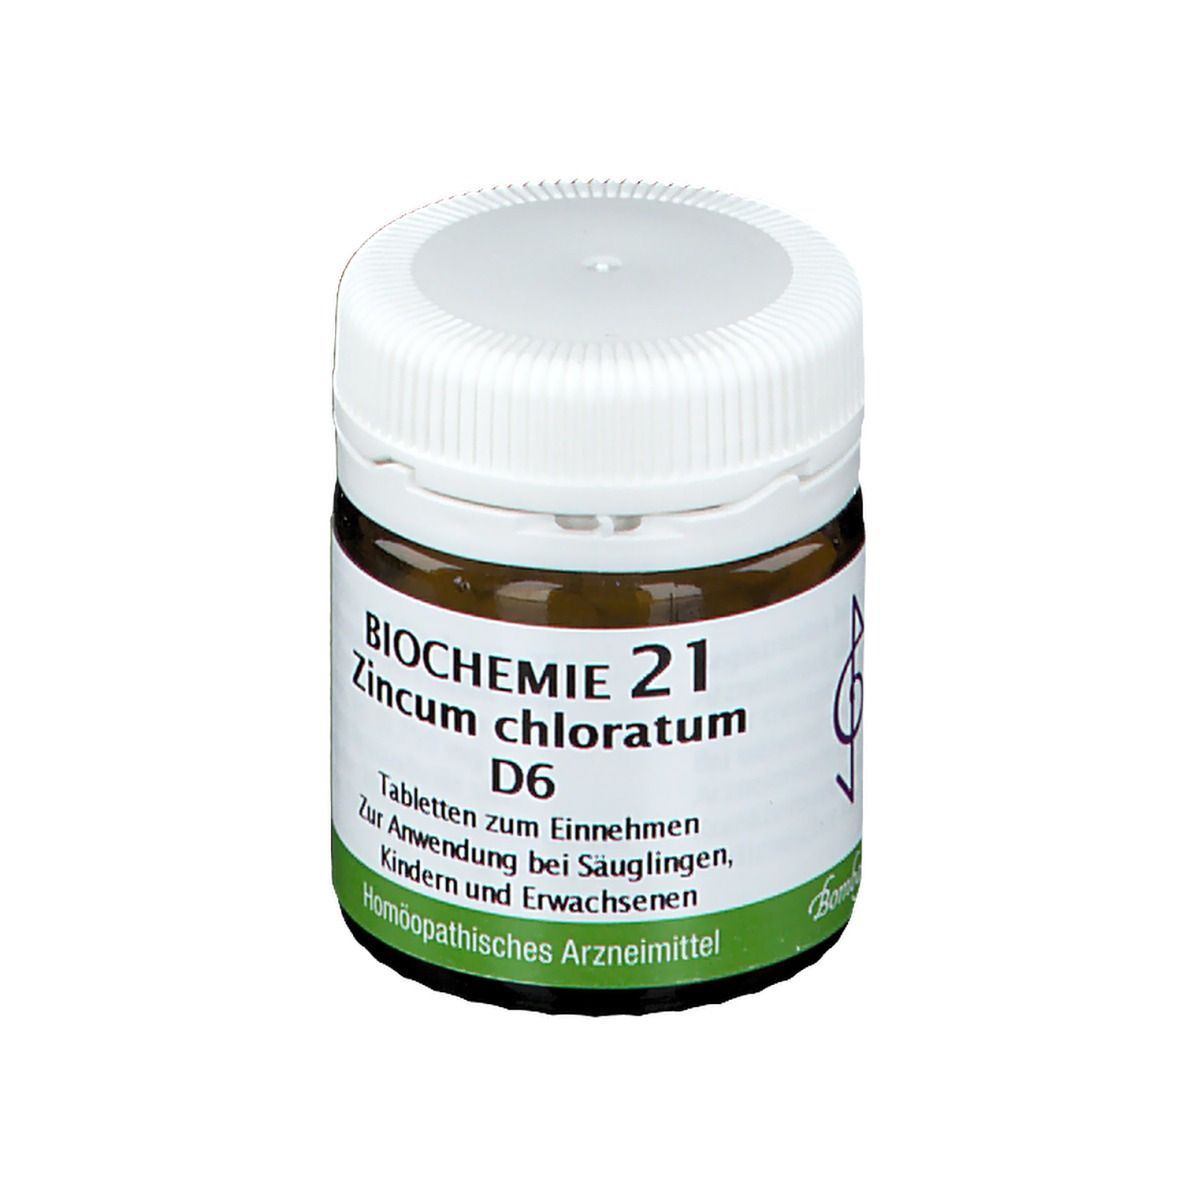 Bombastus Biochemie 21 Zincum chloratum D 6 Tabletten